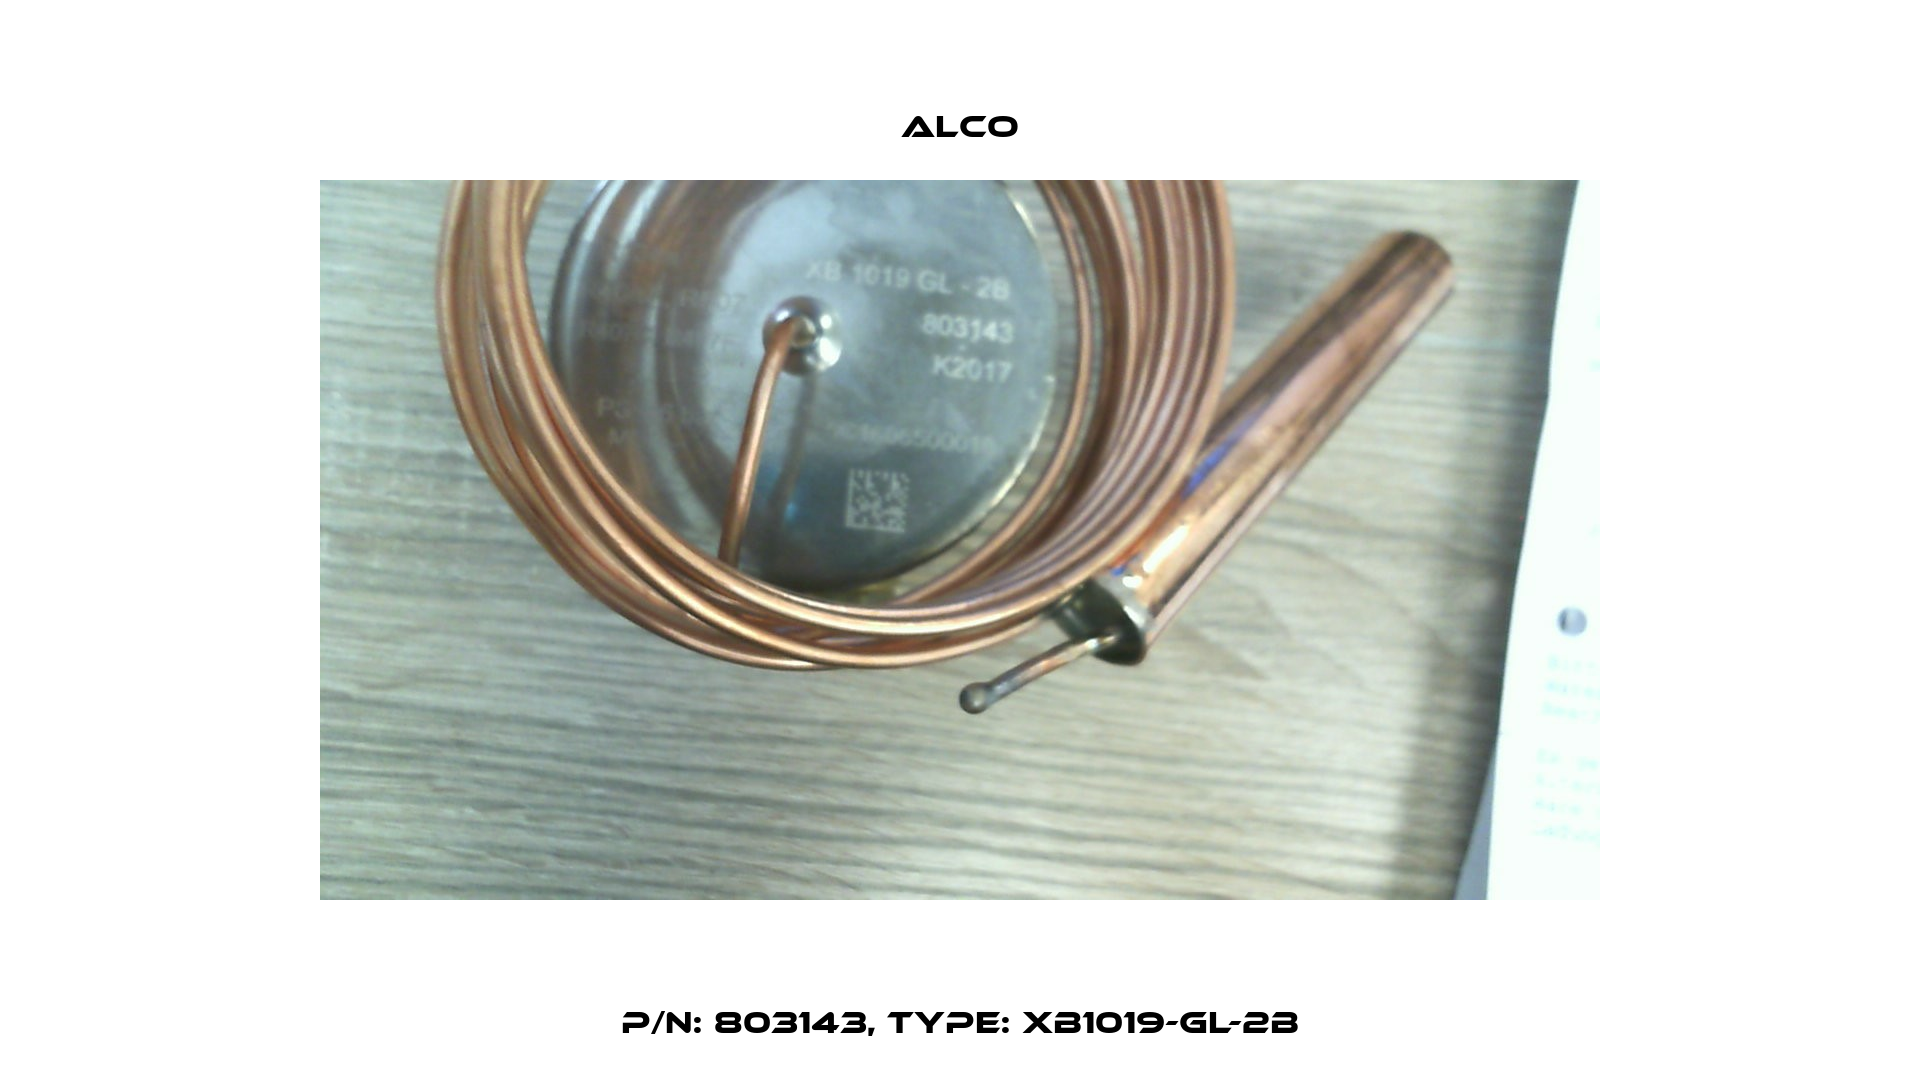 p/n: 803143, Type: XB1019-GL-2B Alco